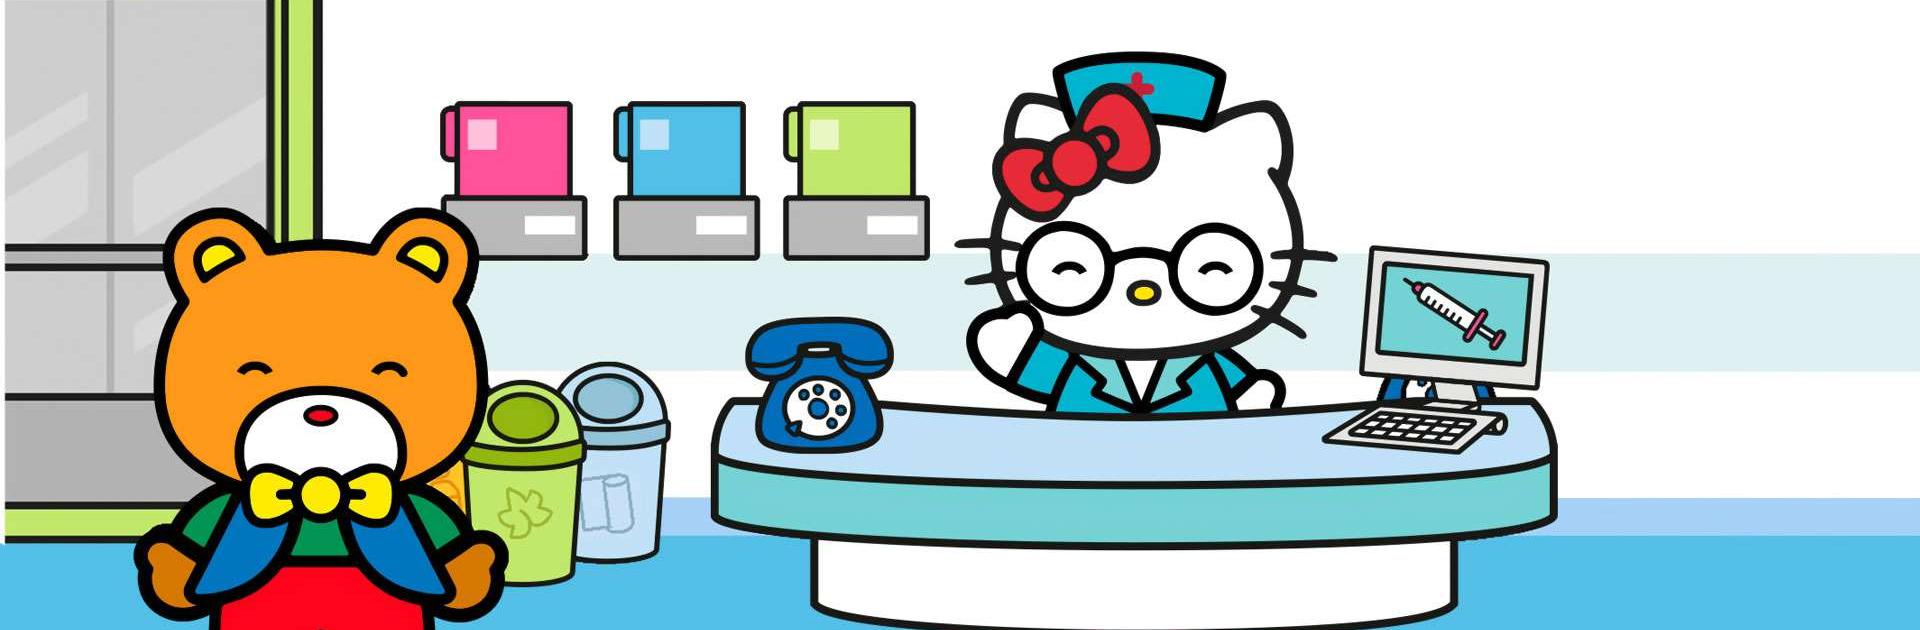 Play Hello Kitty: Kids Hospital Online